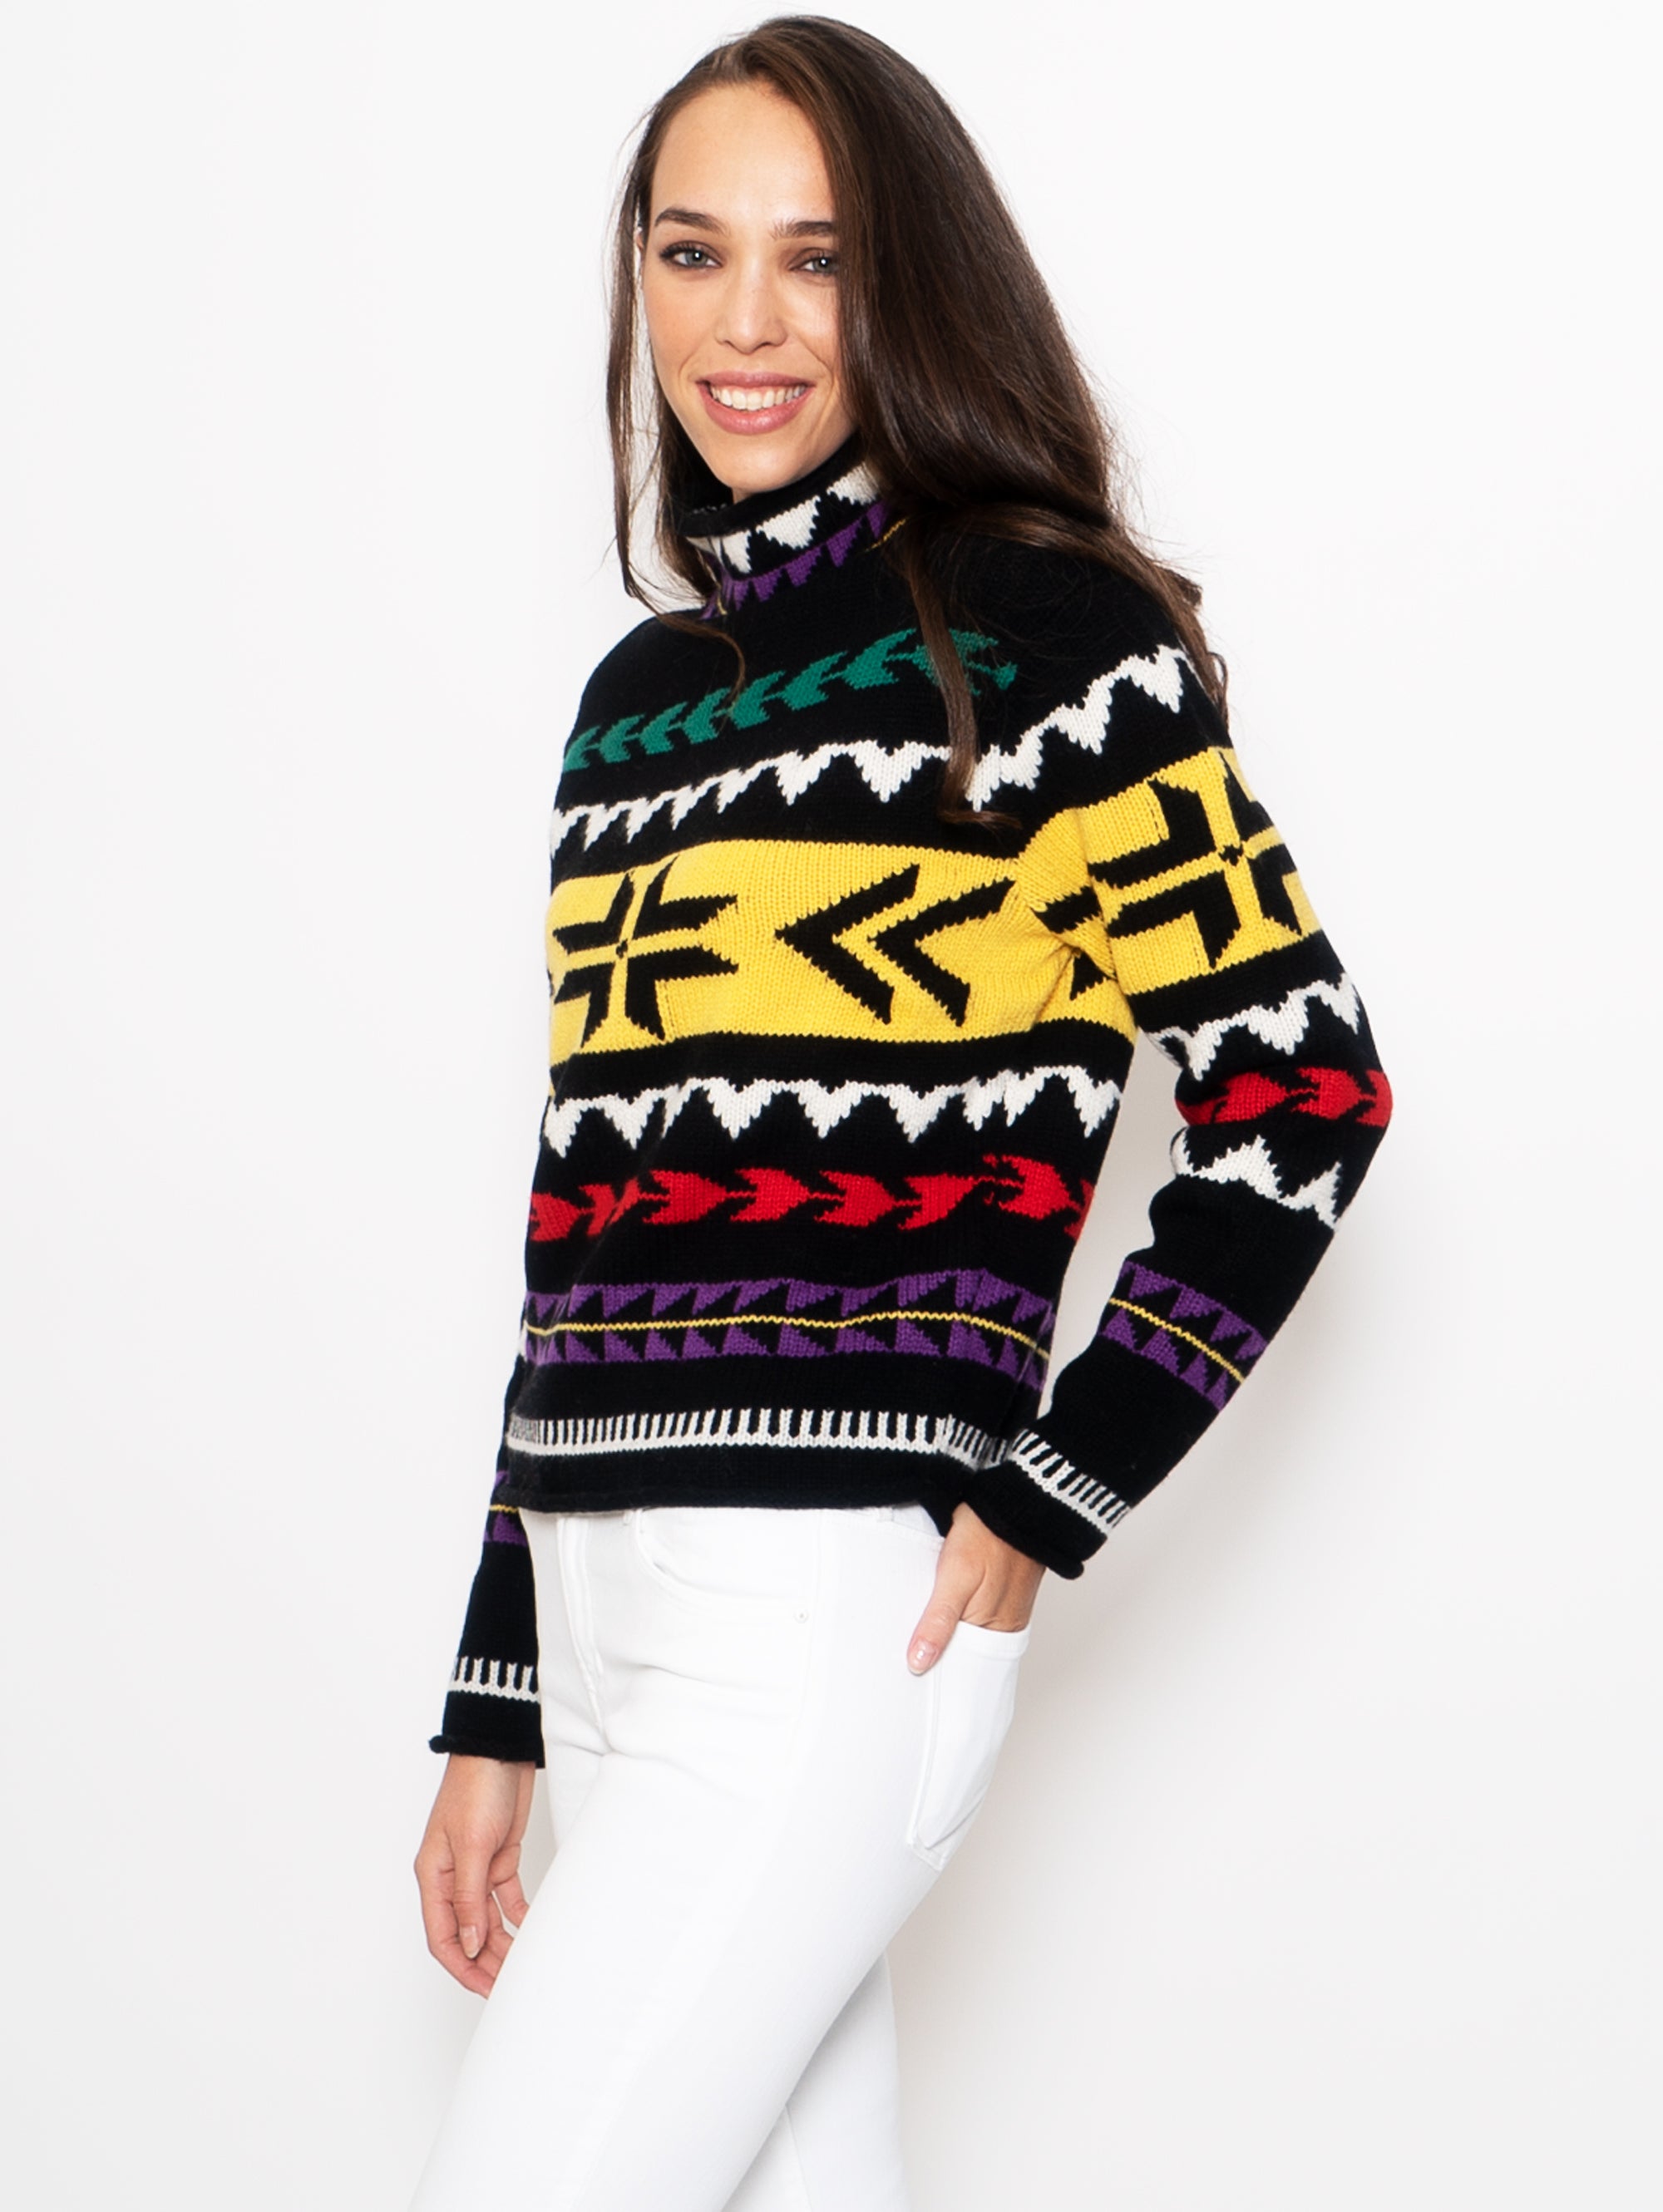 Sweater with Black Jacquard Inlays